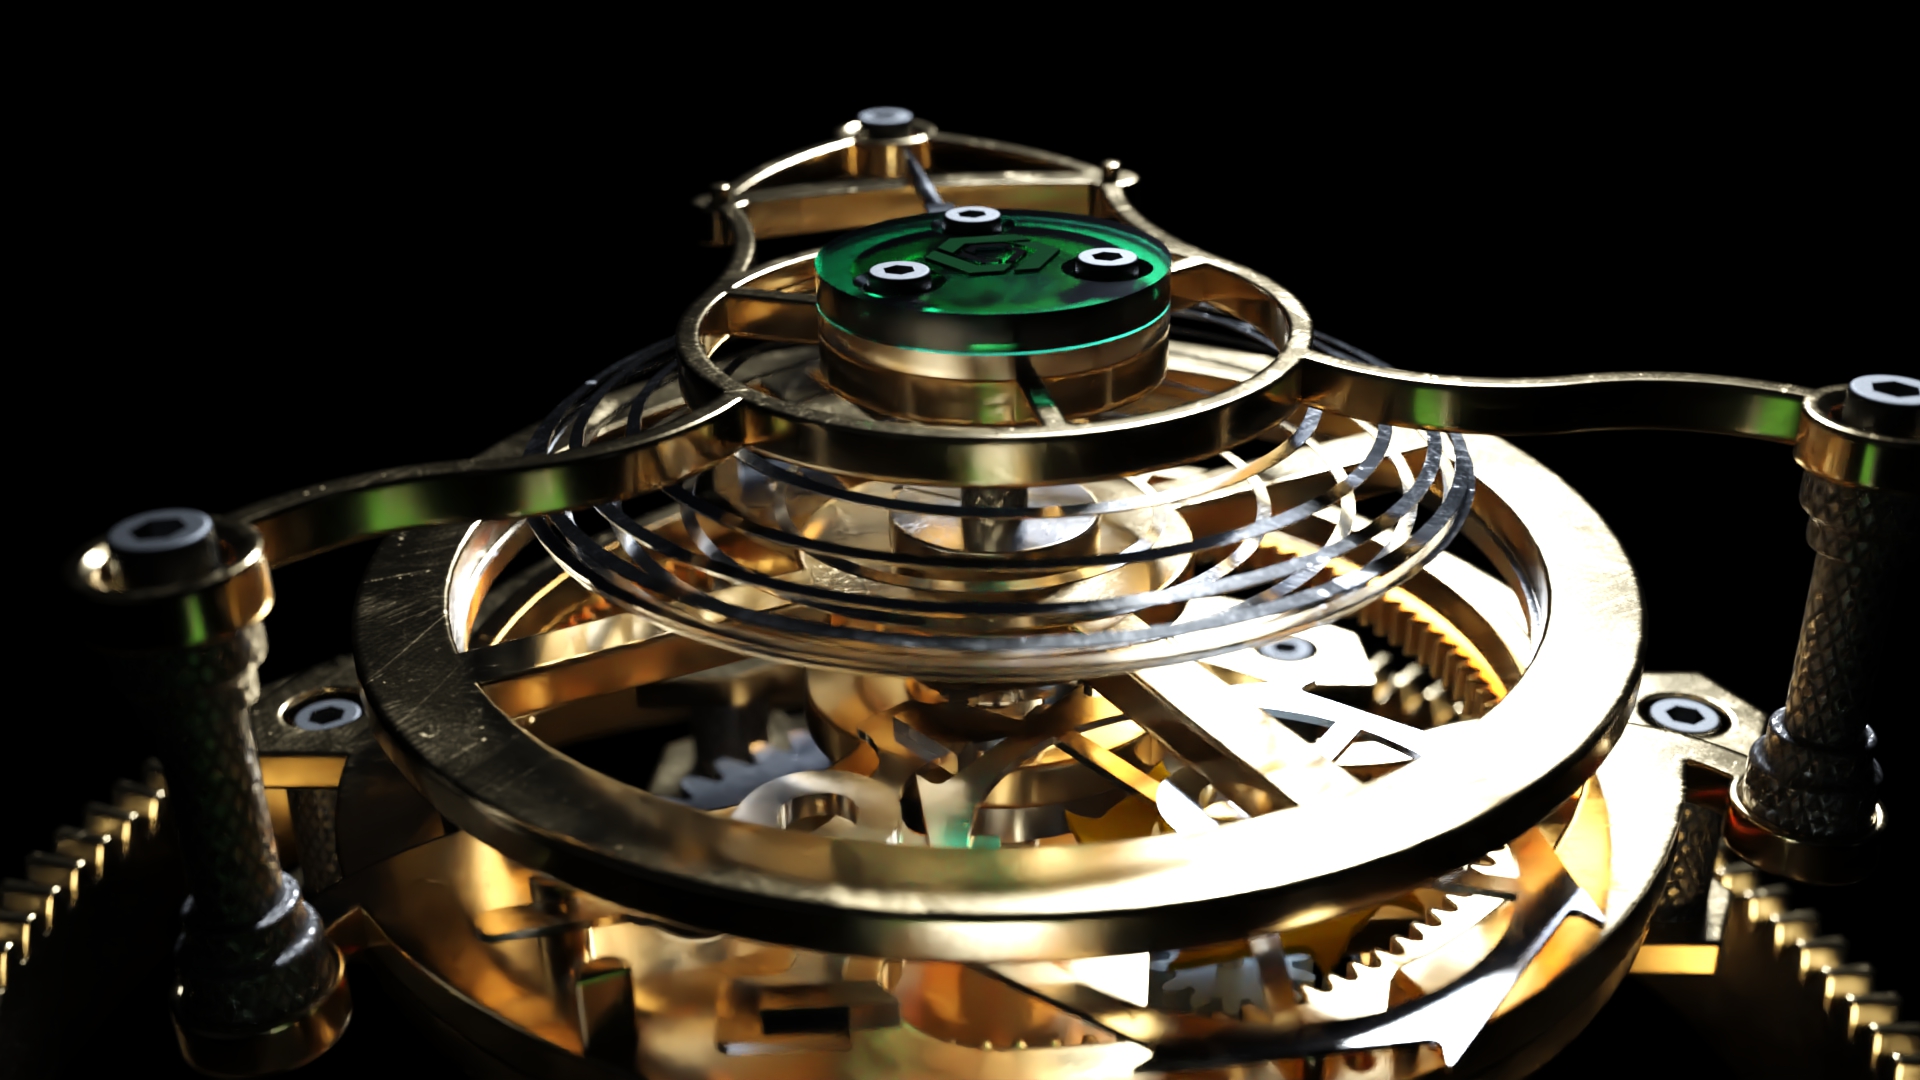 rendering of watch gears